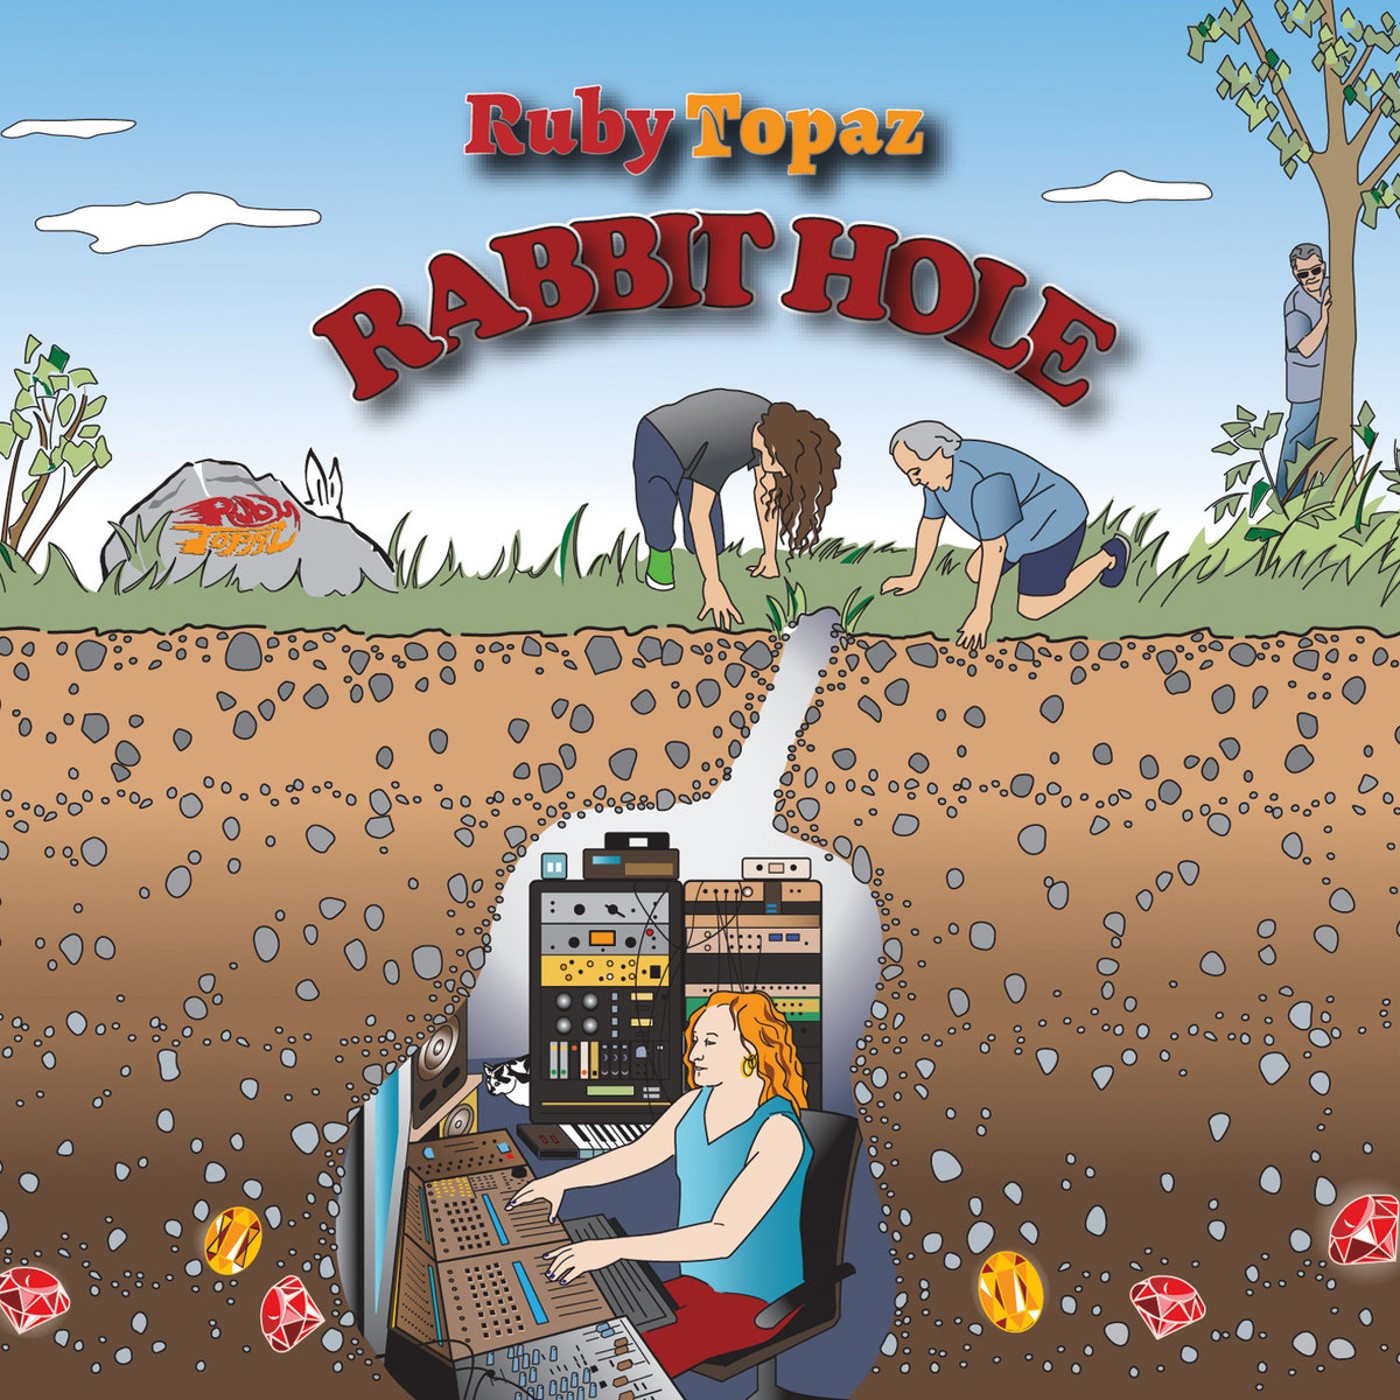 Ruby Topaz ‘Rabbit Hole’ album artwork